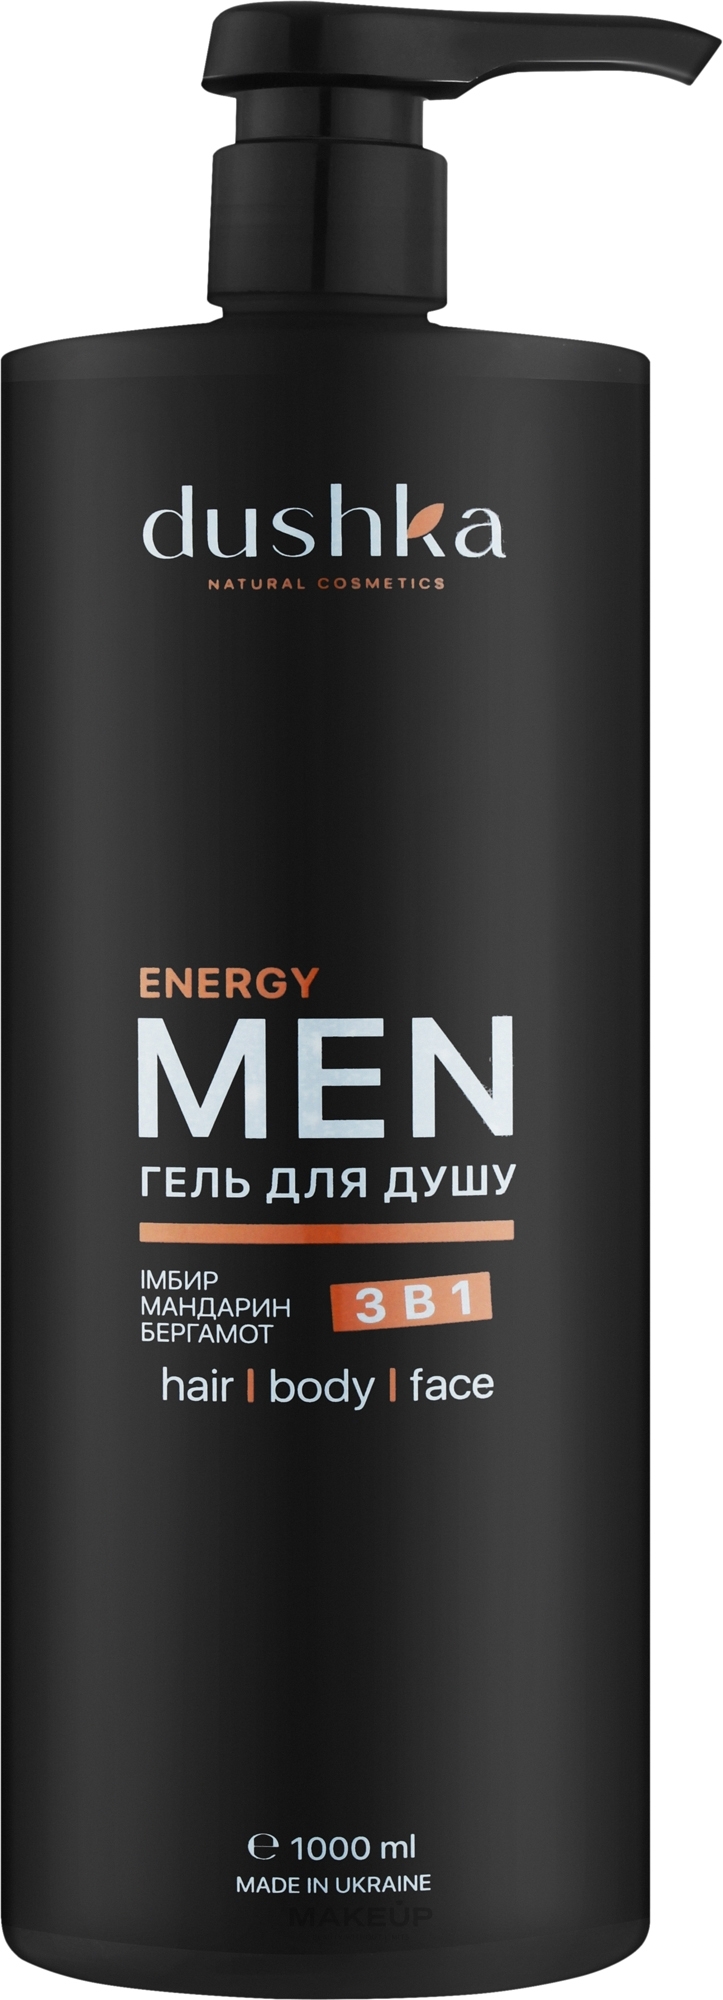 Мужской гель для душа 3 в 1 - Dushka Men Energy 3in1 Shower Gel — фото 1000ml